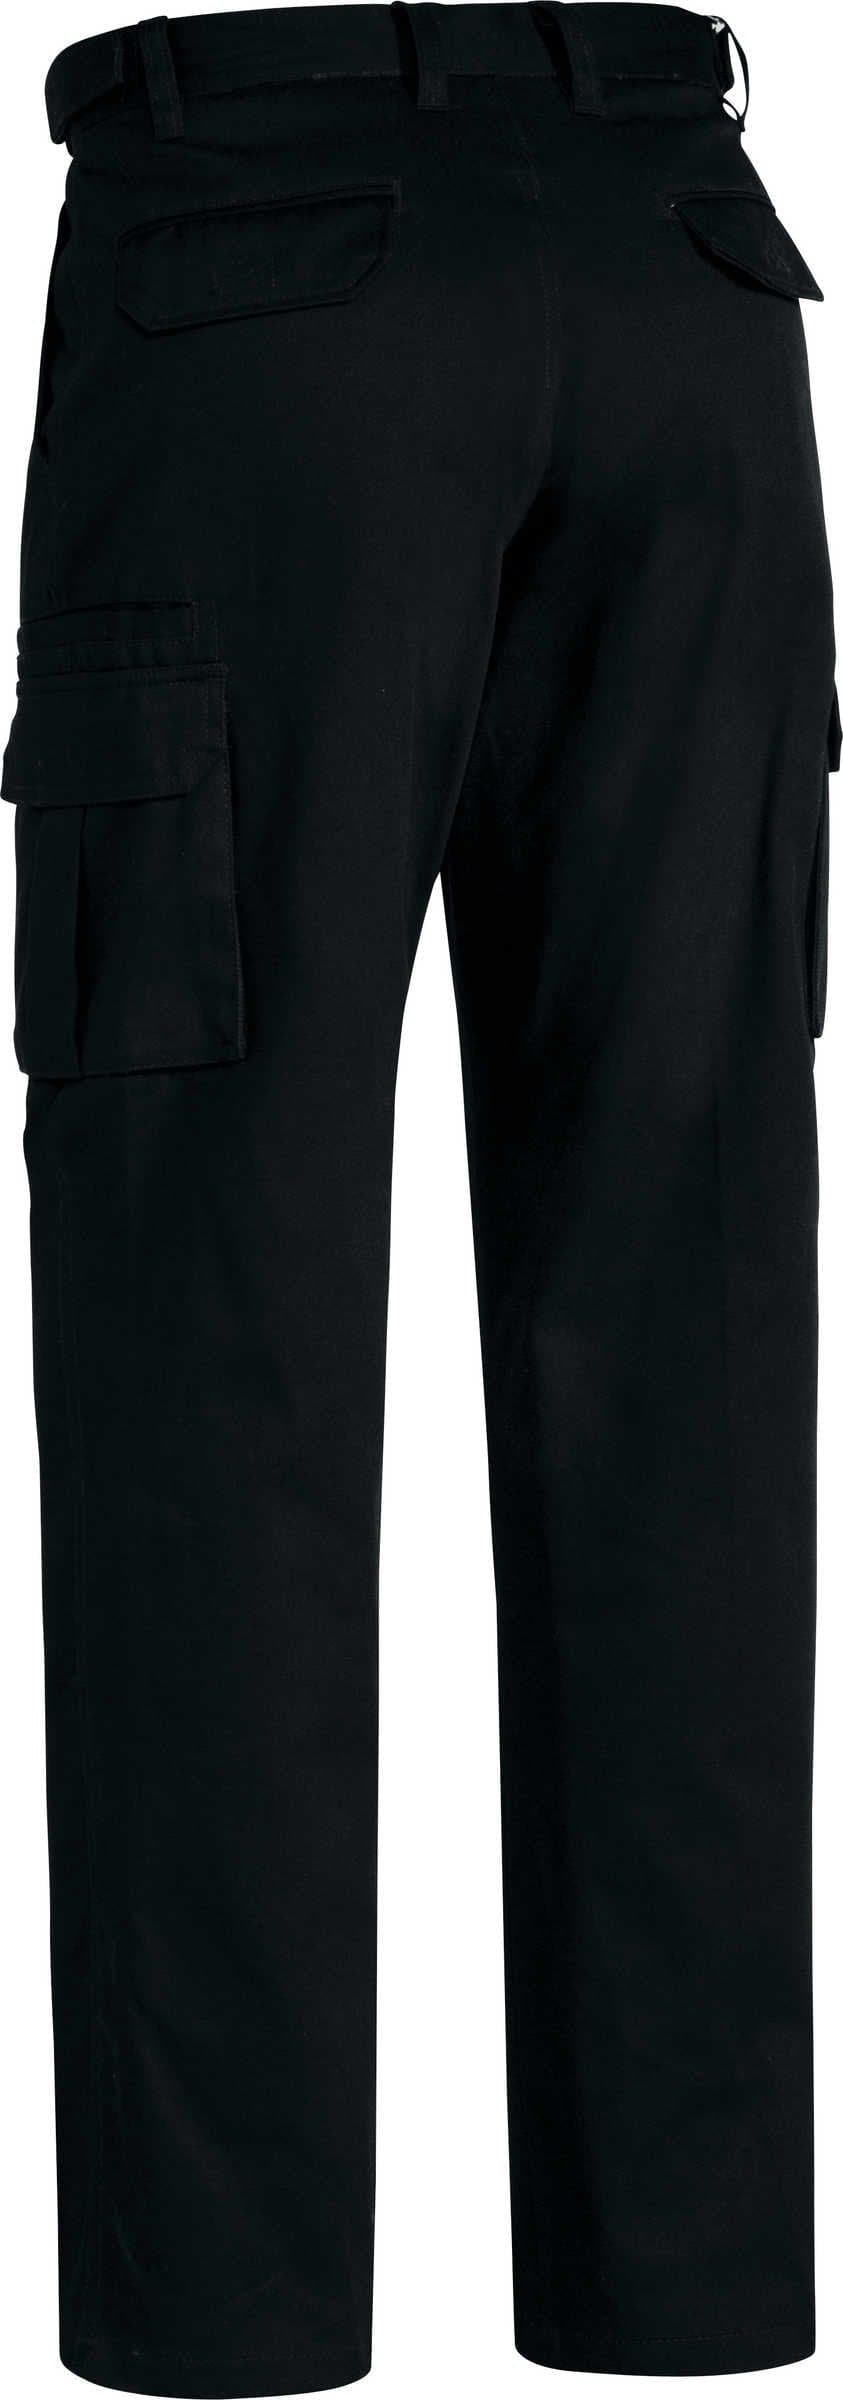 Sapper Cargos : Buy Sapper Regular Fit Men Cargo Pants Online | Nykaa  Fashion